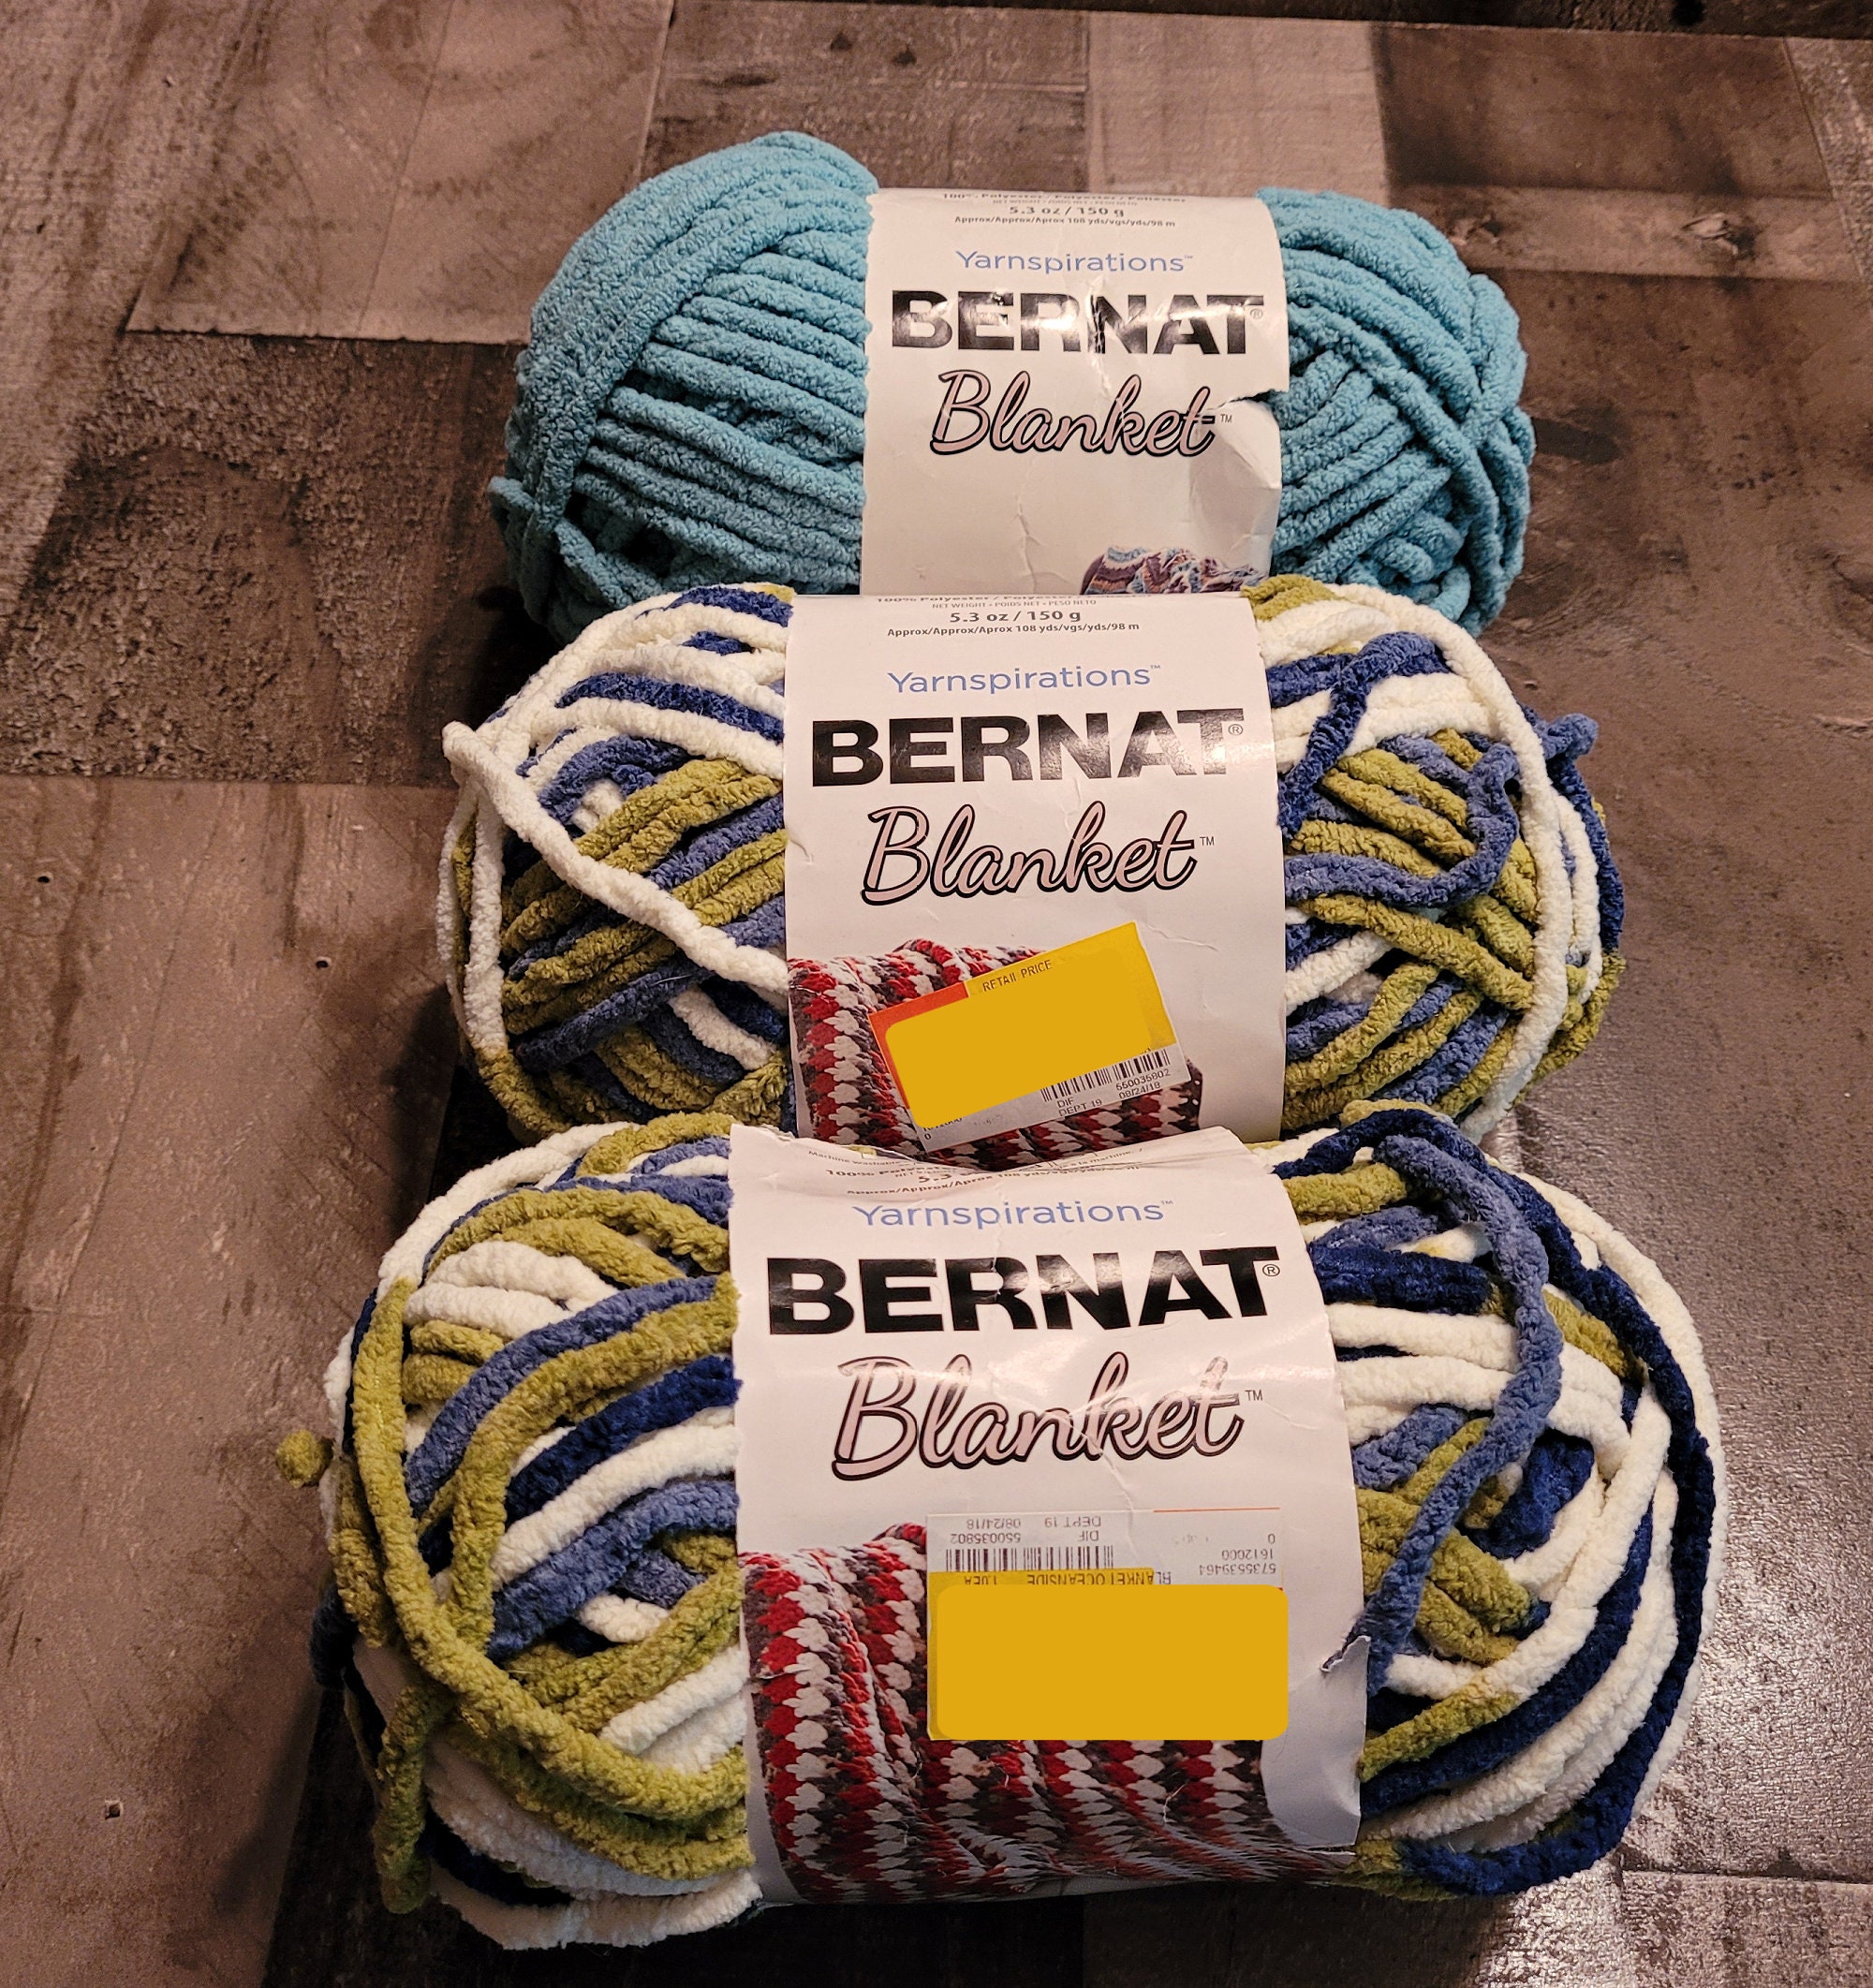 Bernat Blanket Yarn Super Soft, 300g/10.5oz Teal Dreams 